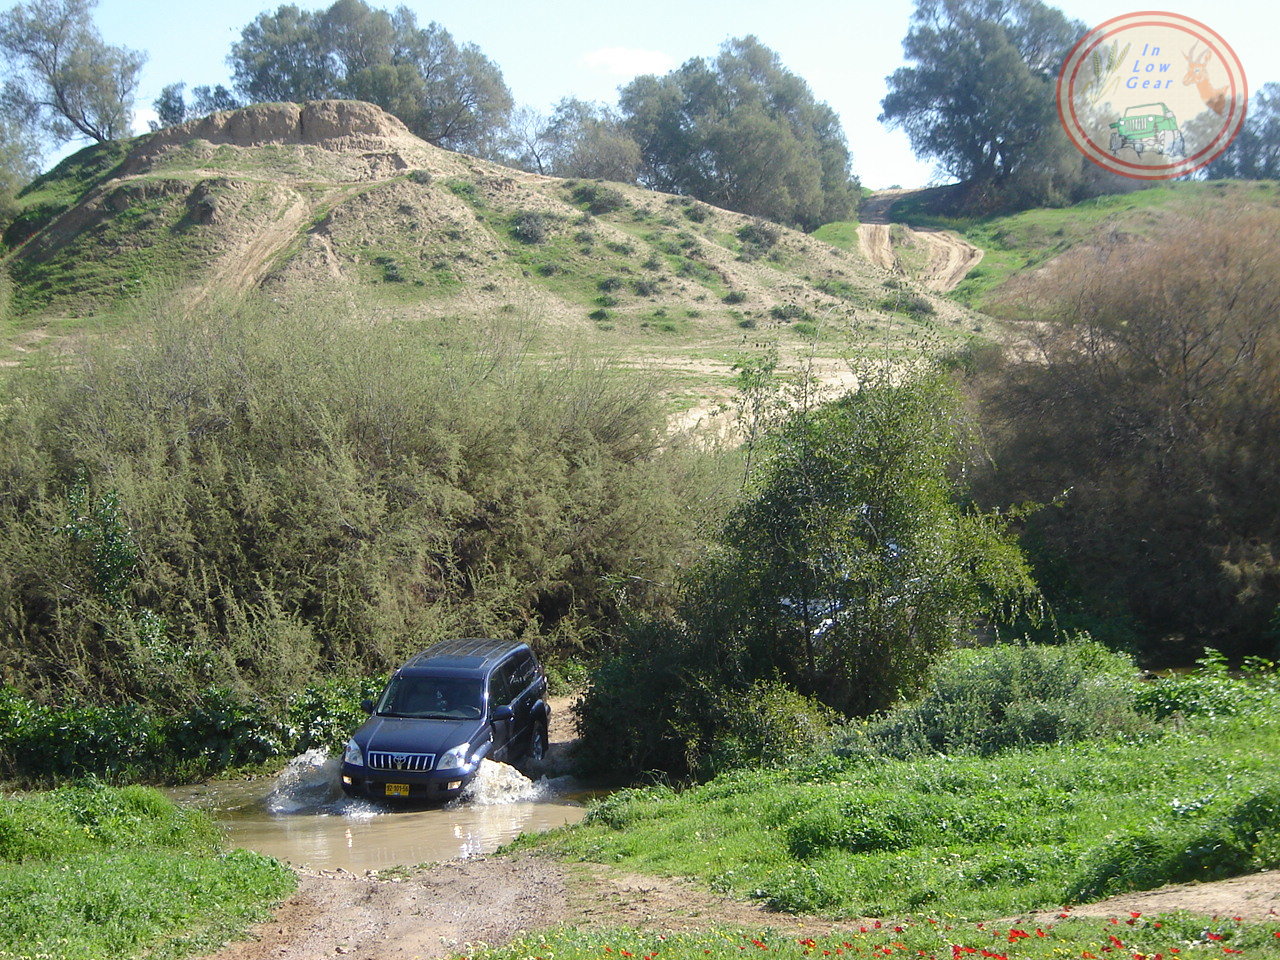 Western Negev Adventure tours 4x4 jeep tracks.